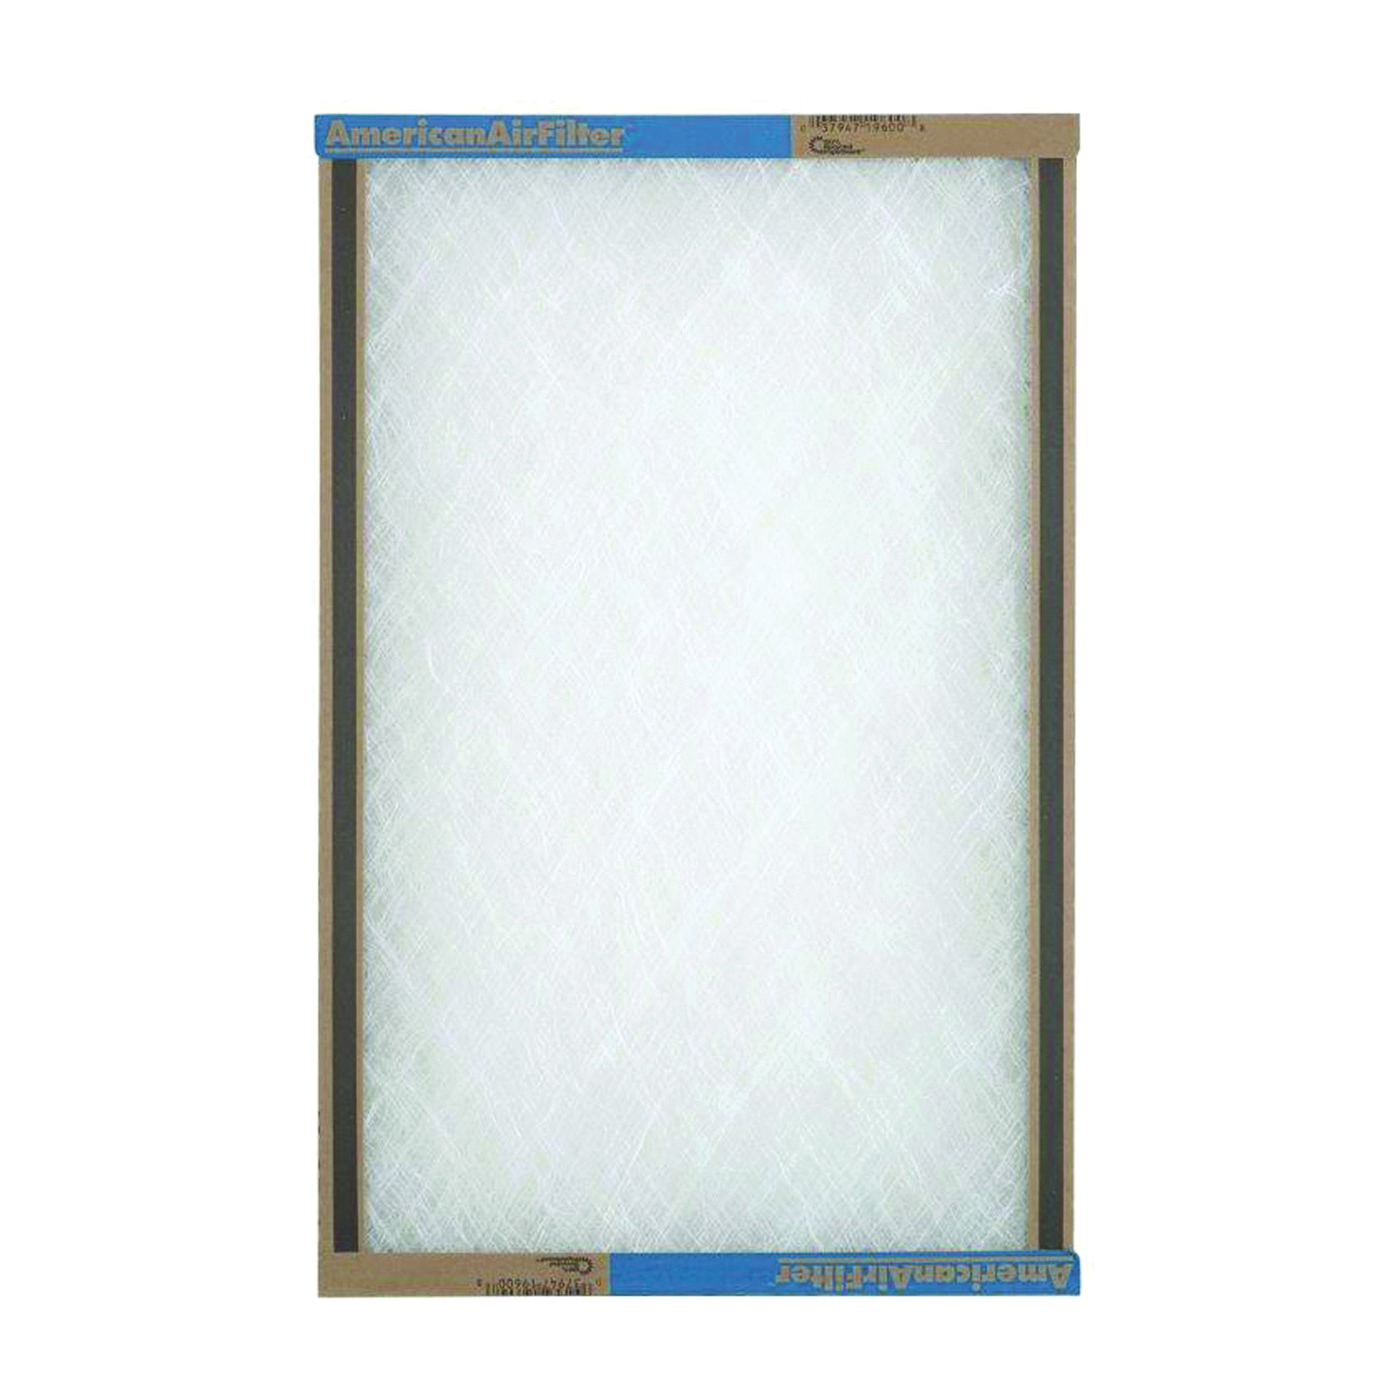 114301 Panel Air Filter, 30 x 14 x 1, Chipboard Frame